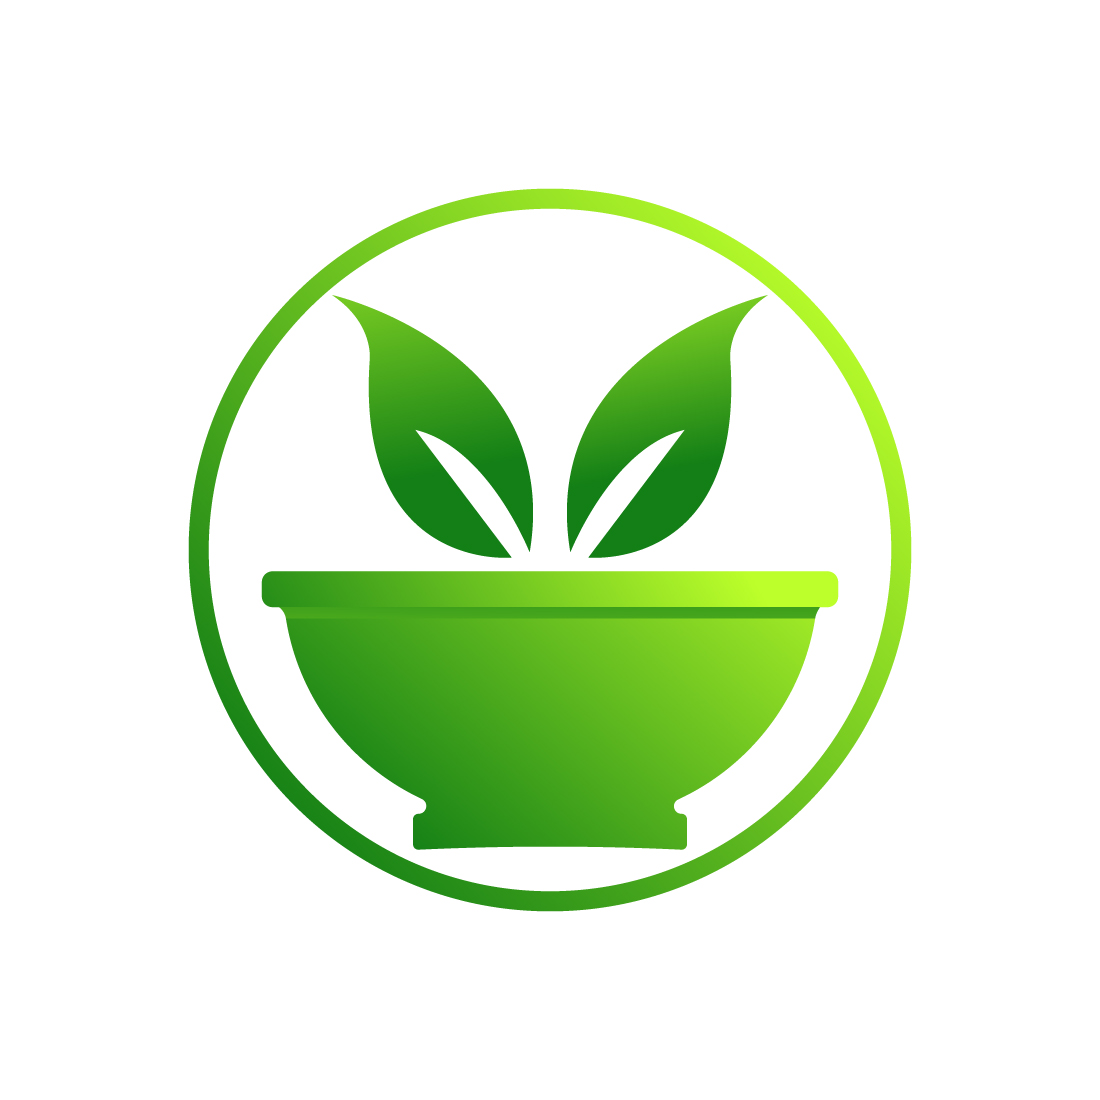 Green Herbal logo design vector images Green tree logo best icon Green Vegetable logo design template icon Vegan food, healthy soup Vector logo best monogram identity cover image.